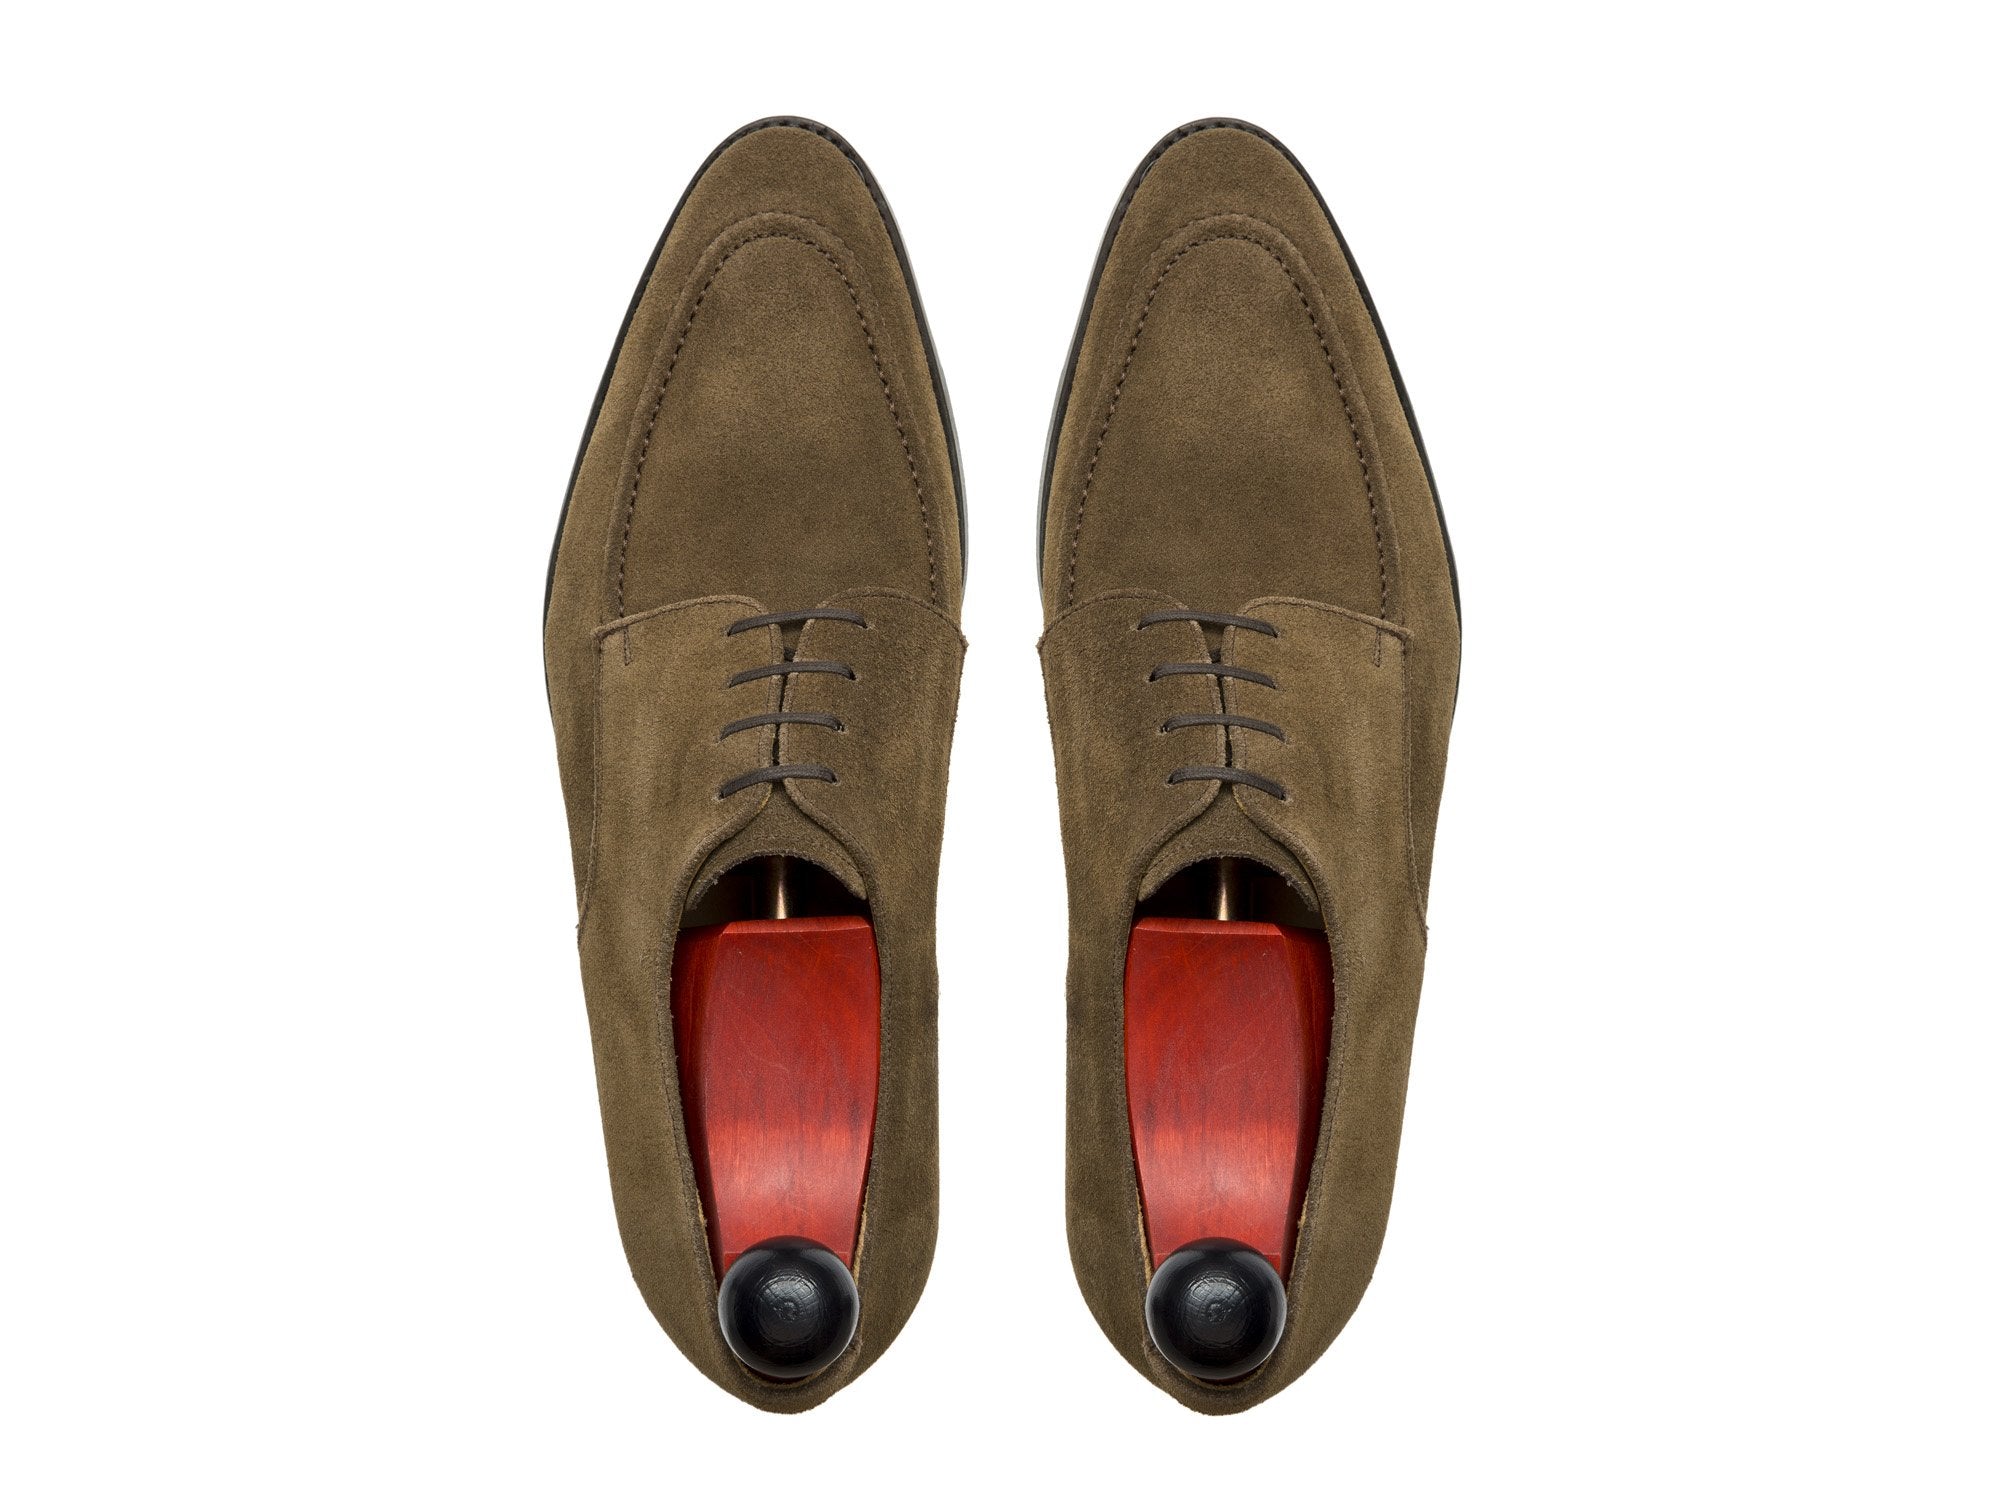 J.FitzPatrick Footwear - Lynwood - Taupe Suede - SEA Last - Double Leather Sole